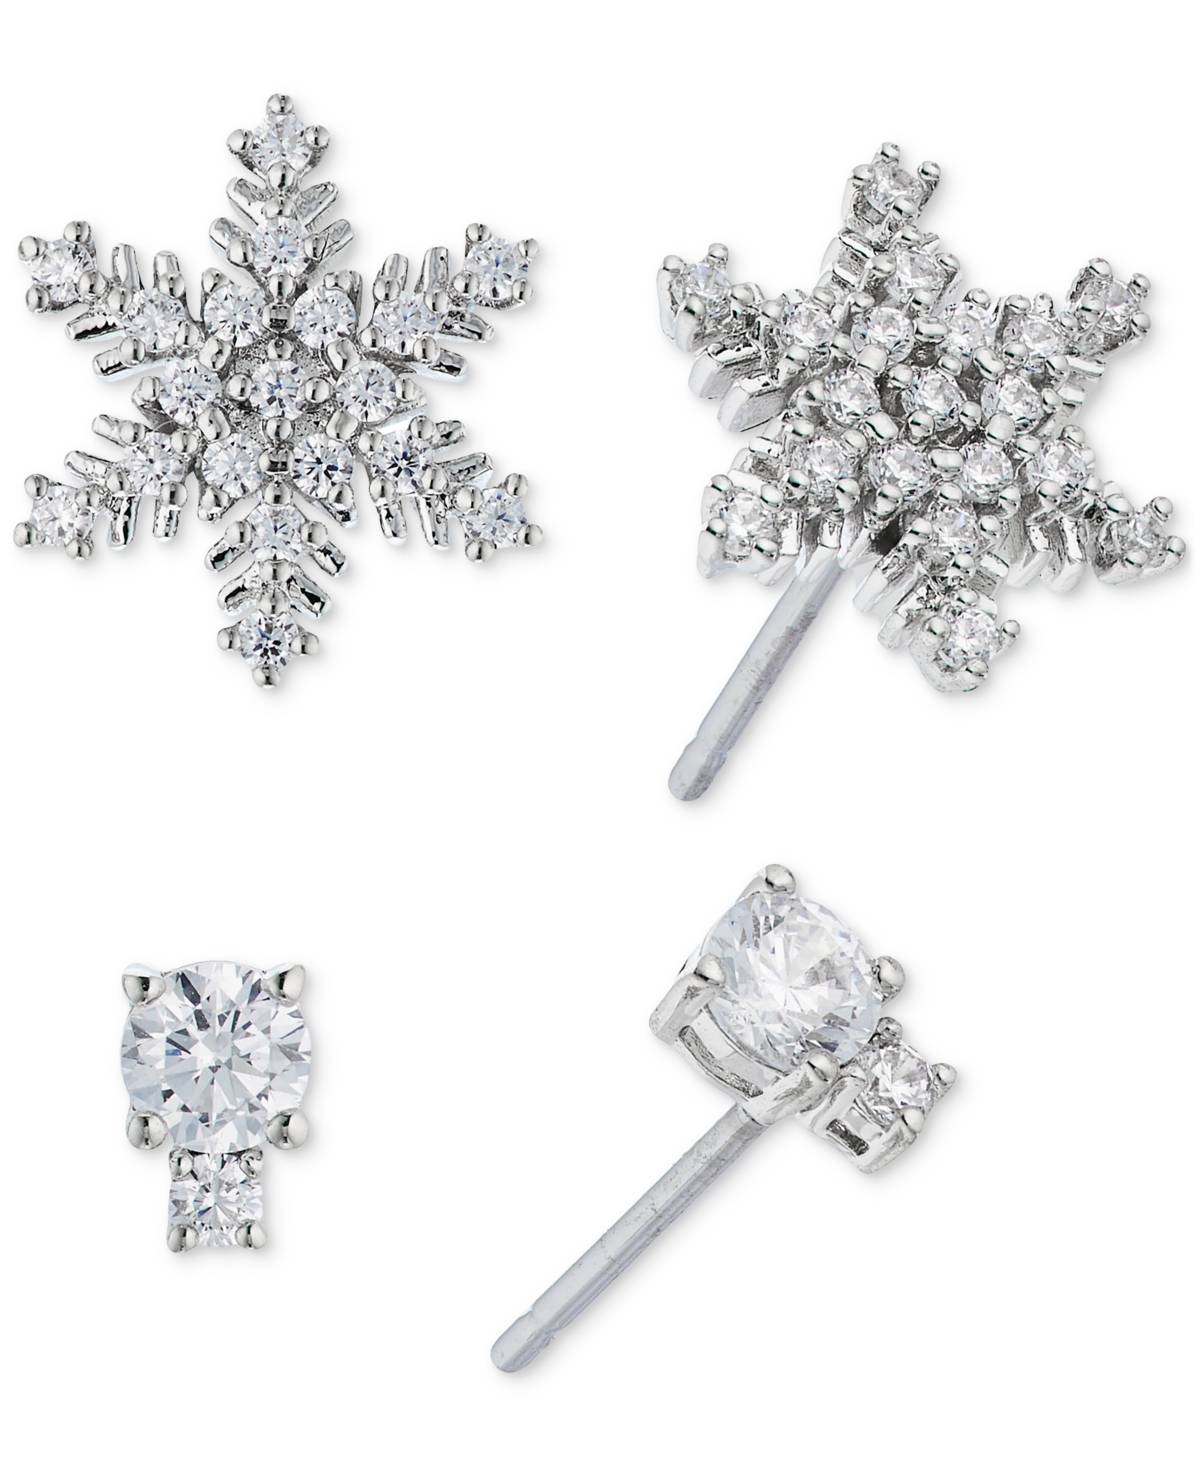 Silver-Tone Crystal Snowflake &Stud Earrings Set - Rhodium